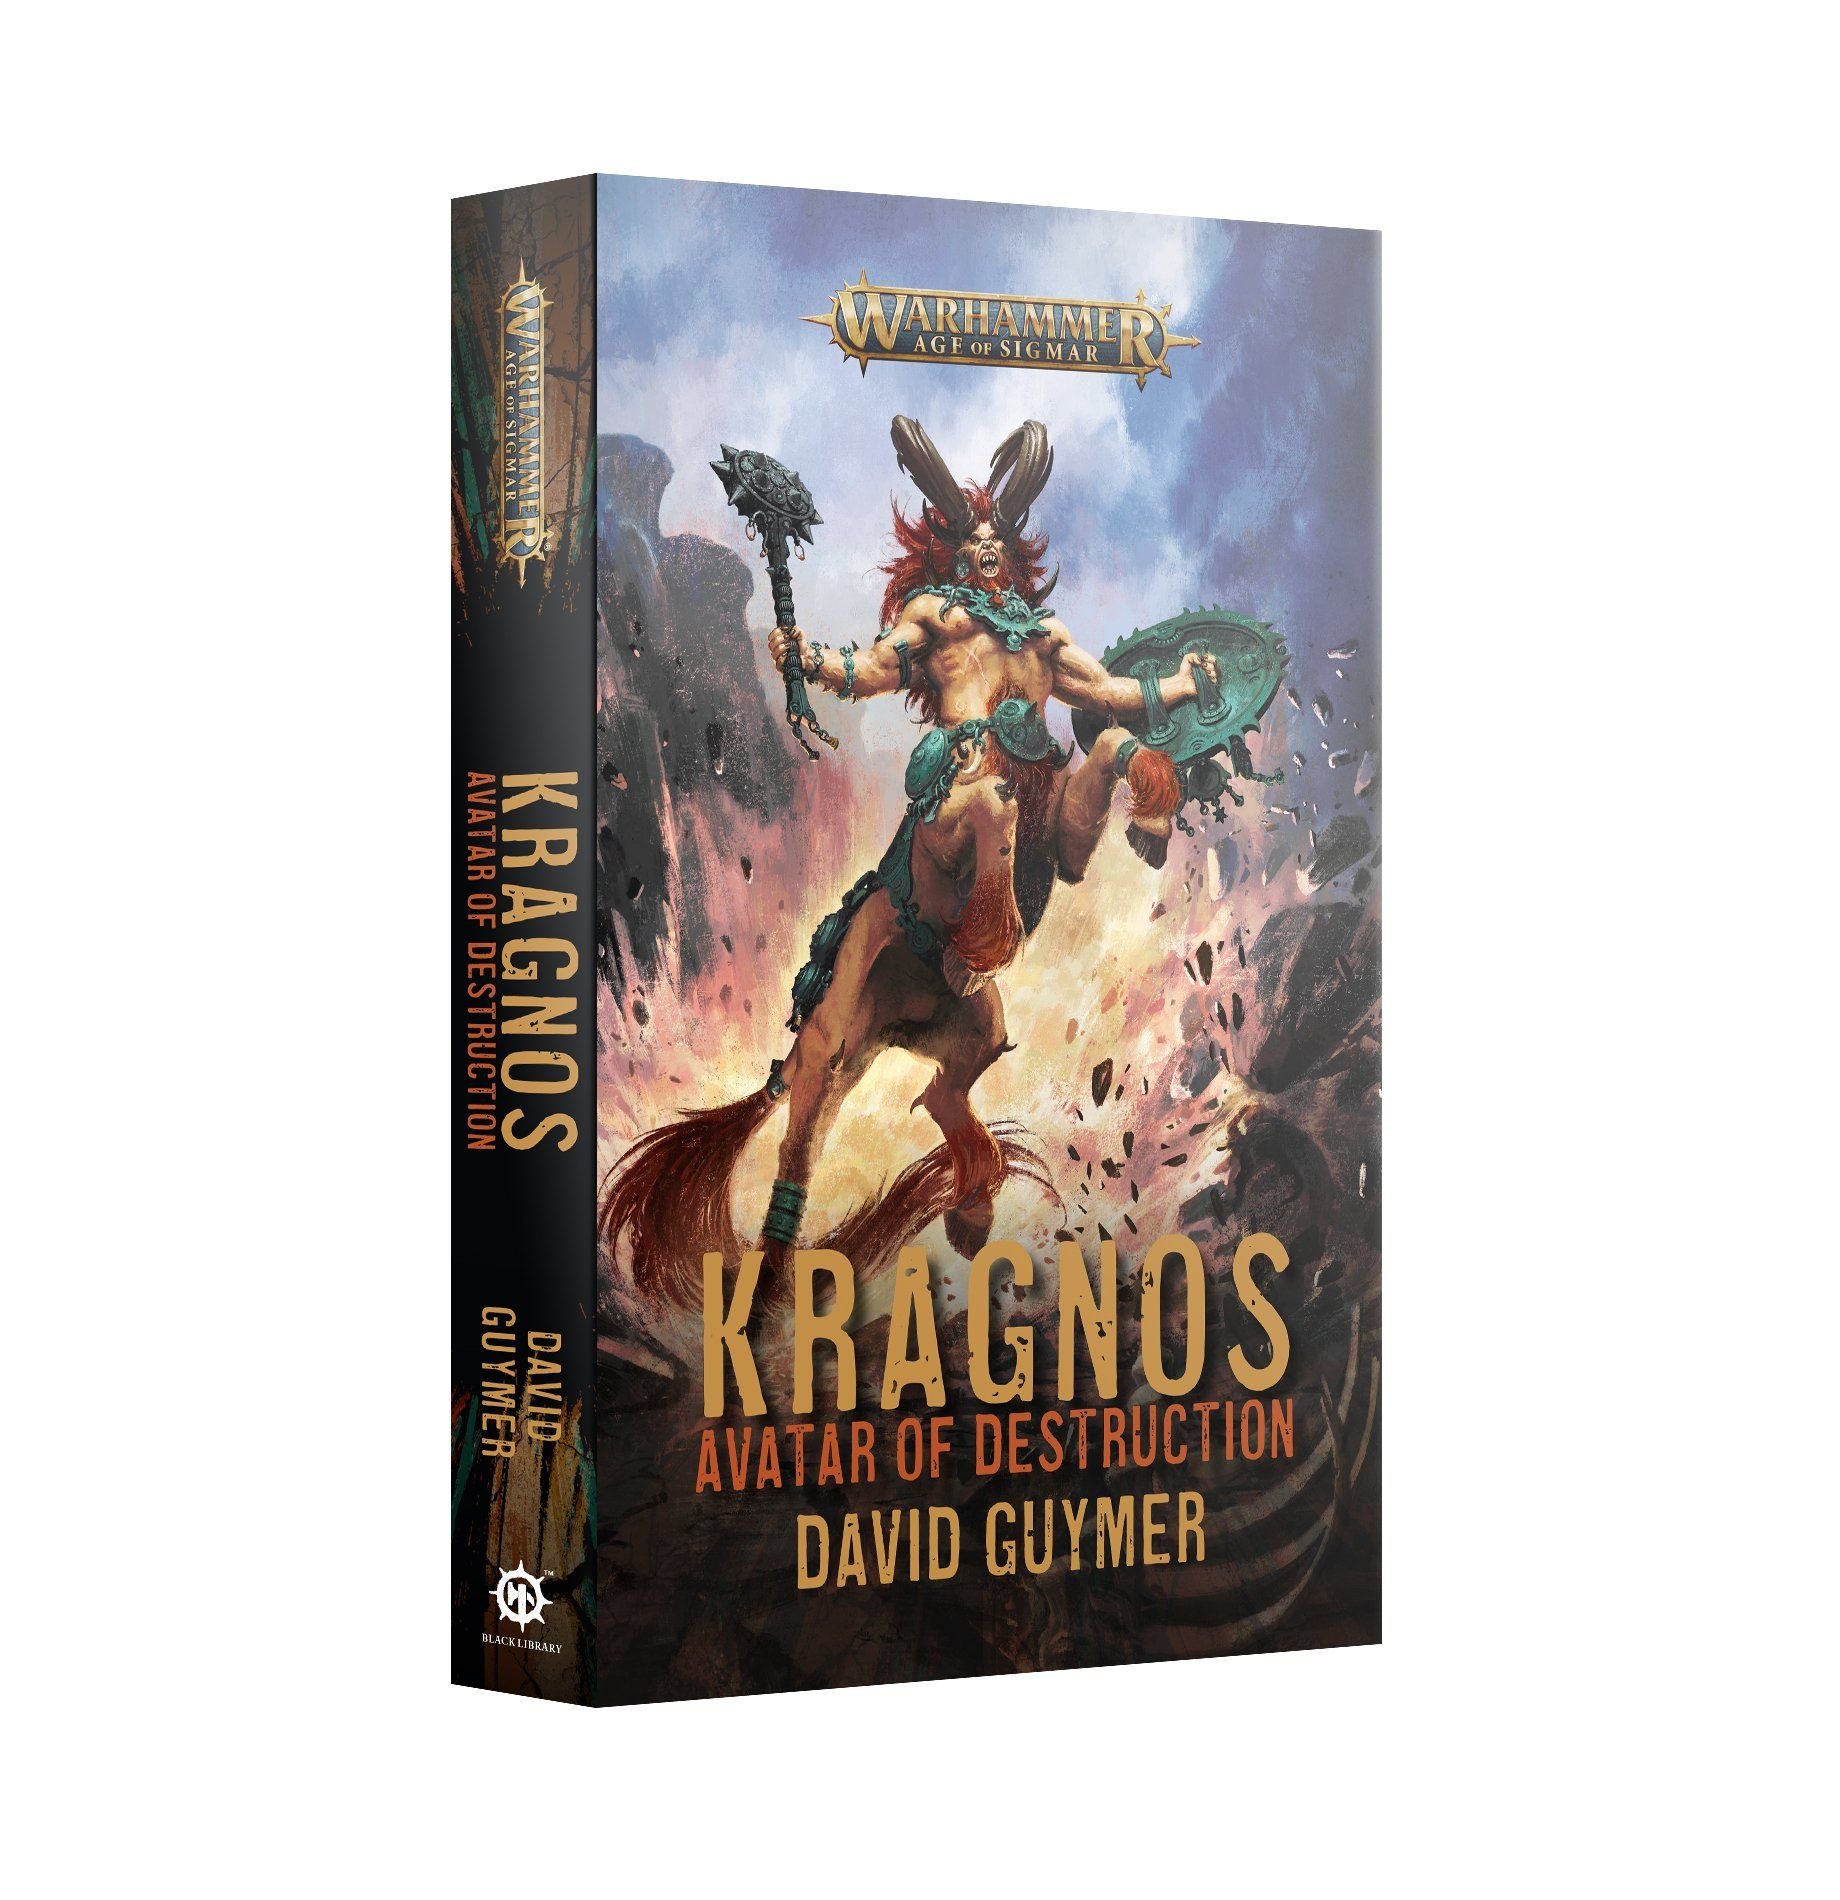 Kragnos: Avatar of Destruction Paperback - English